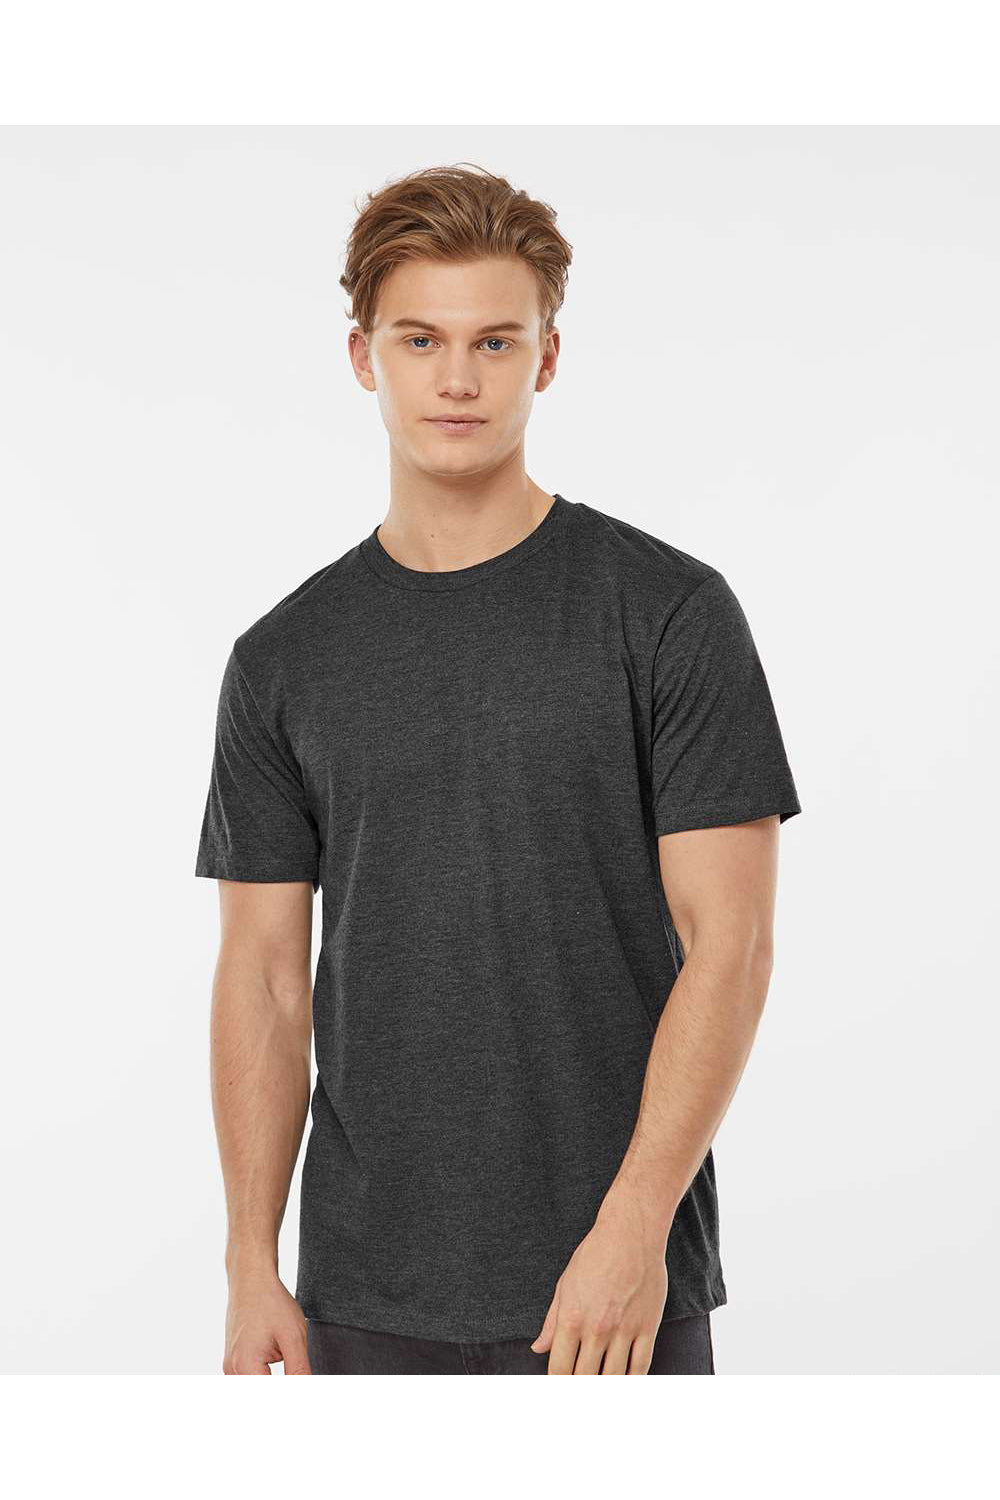 Tultex 541 Mens Premium Short Sleeve Crewneck T-Shirt Heather Black Model Front